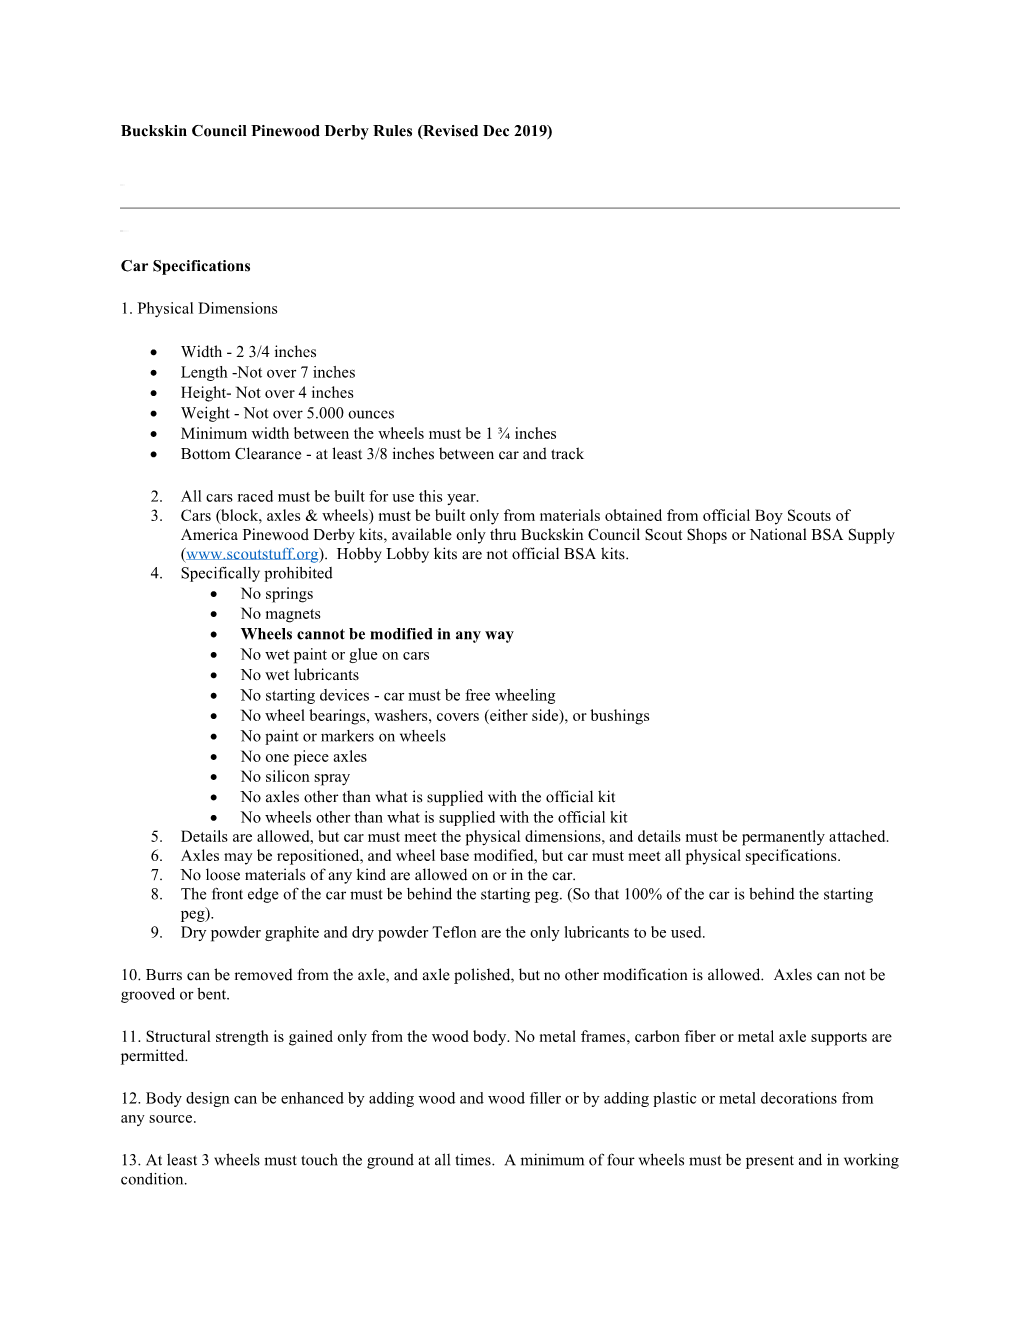 Buckskin Council Pinewood Derby Rules (Revised Dec 2019) Car